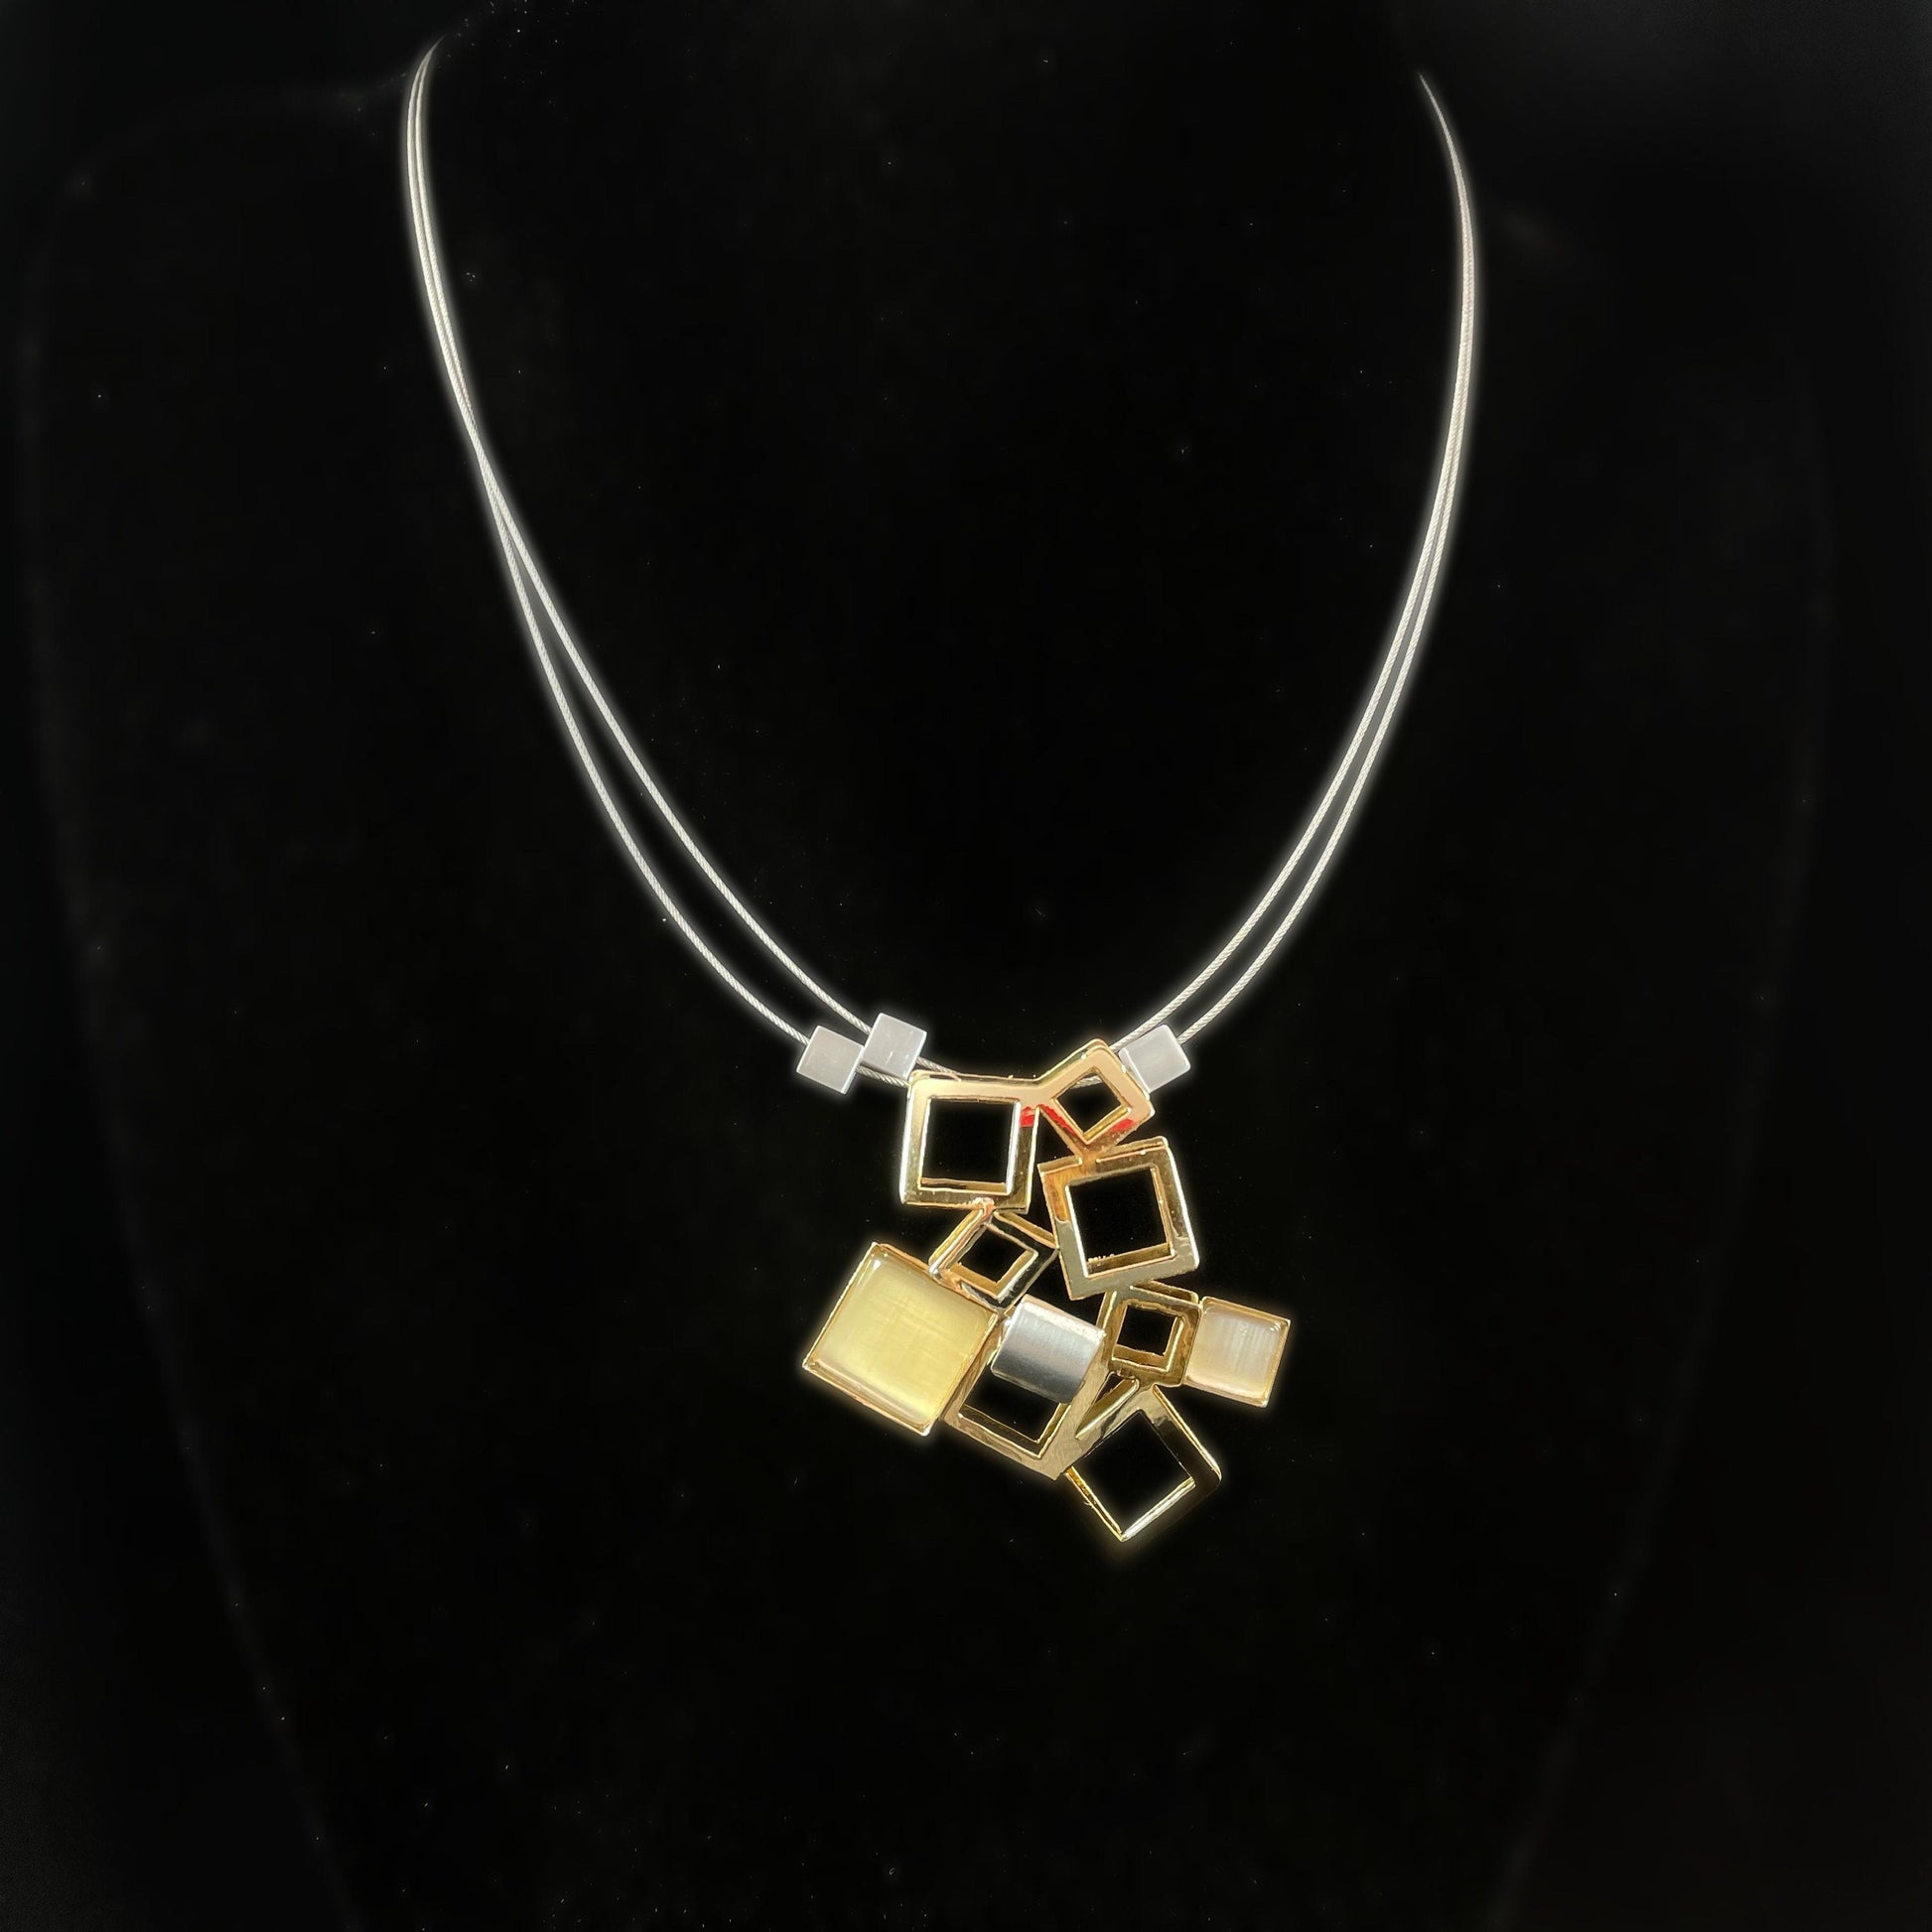 Lightweight Handmade Geometric Aluminum Necklace, Gold and Beige